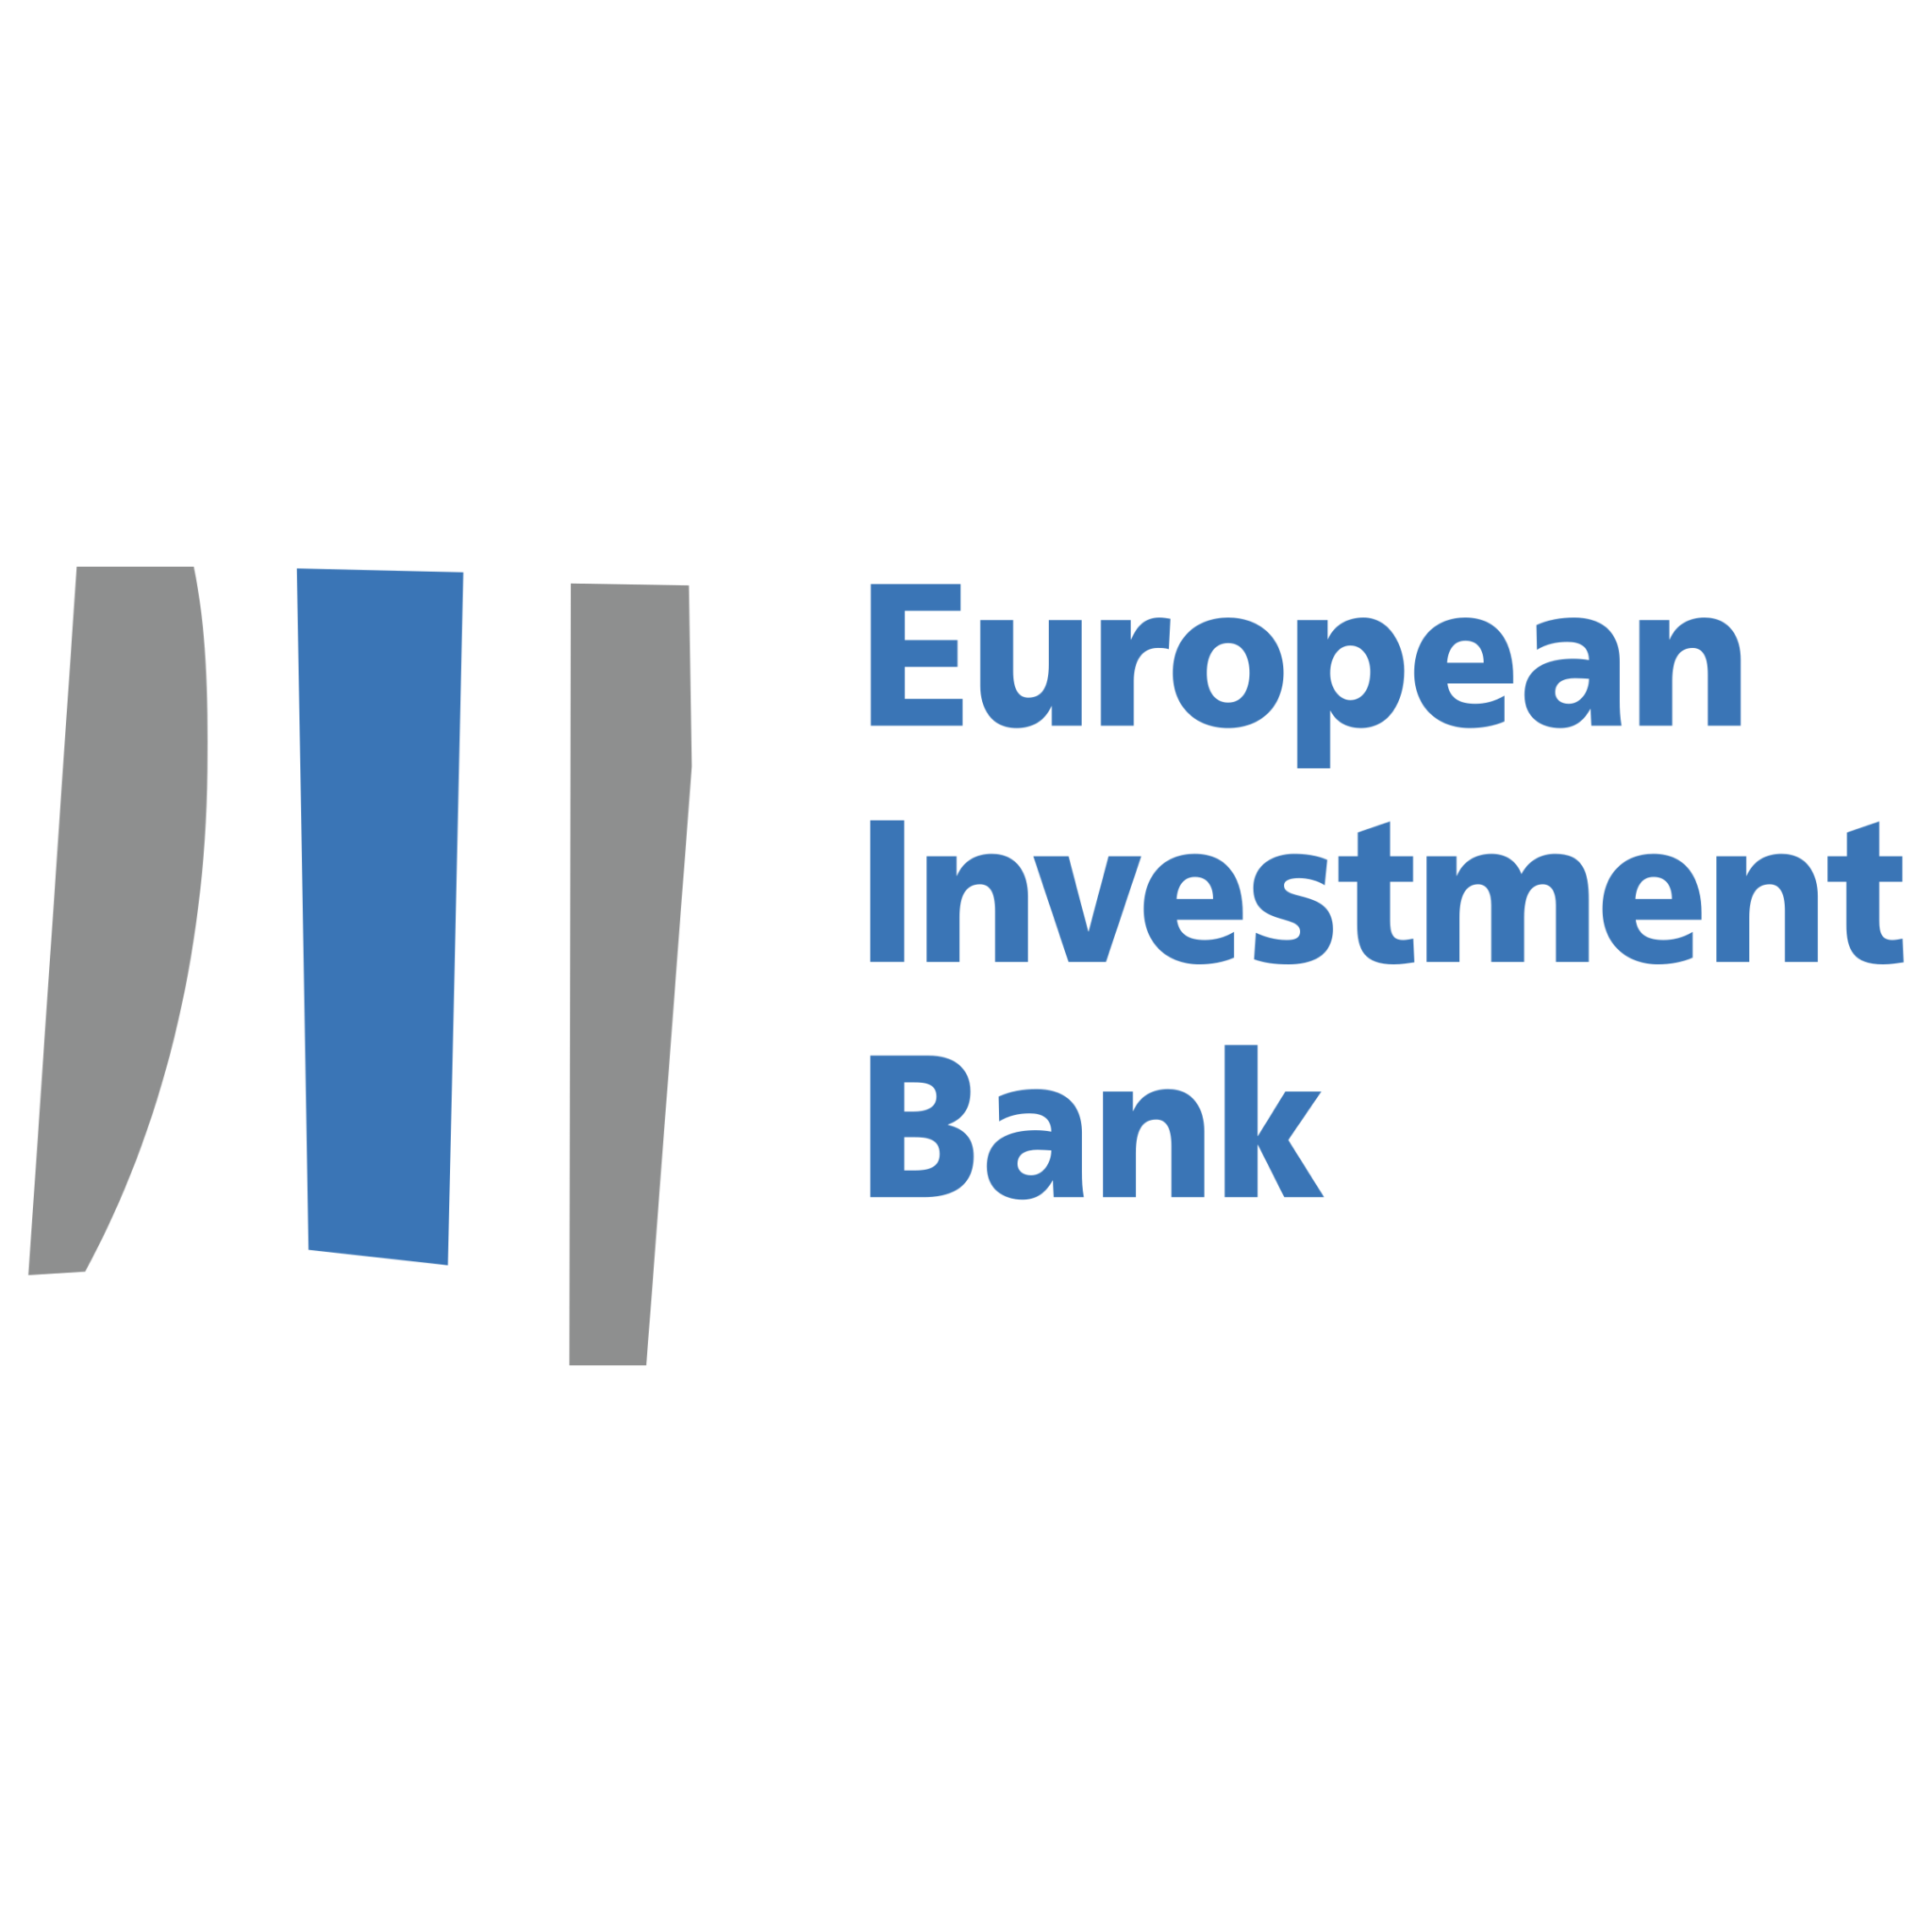 European investment Bank. Европейского инвестиционного банка. ЕИБ. Европейский инвестиционный банк доклад. Европейский инвестиционный банк